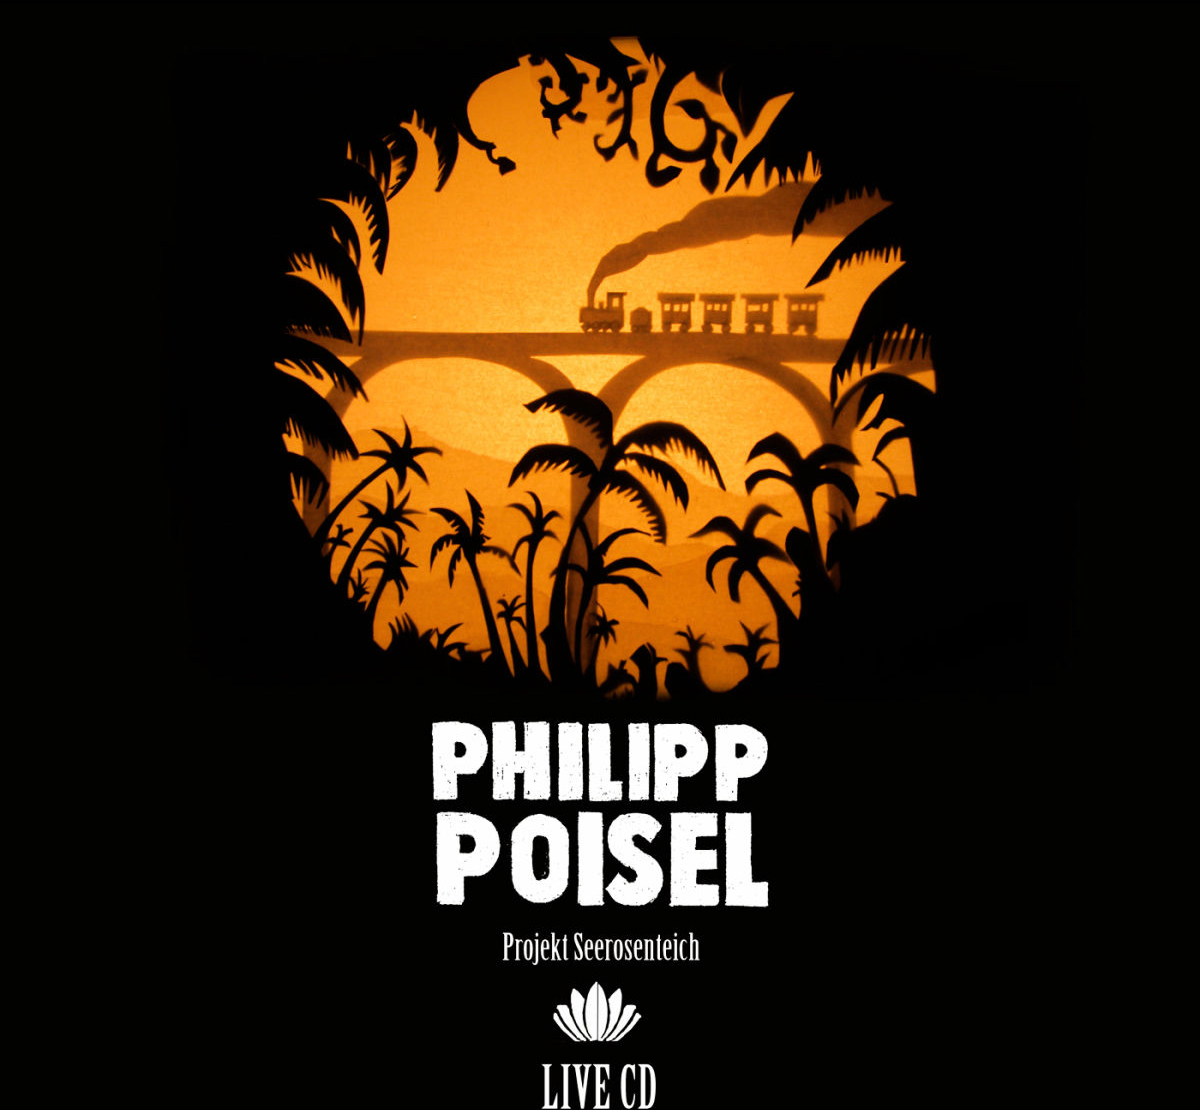 - / Limited) Philipp Poisel (Live (CD Buch) - Premium Seerosenteich Projekt +